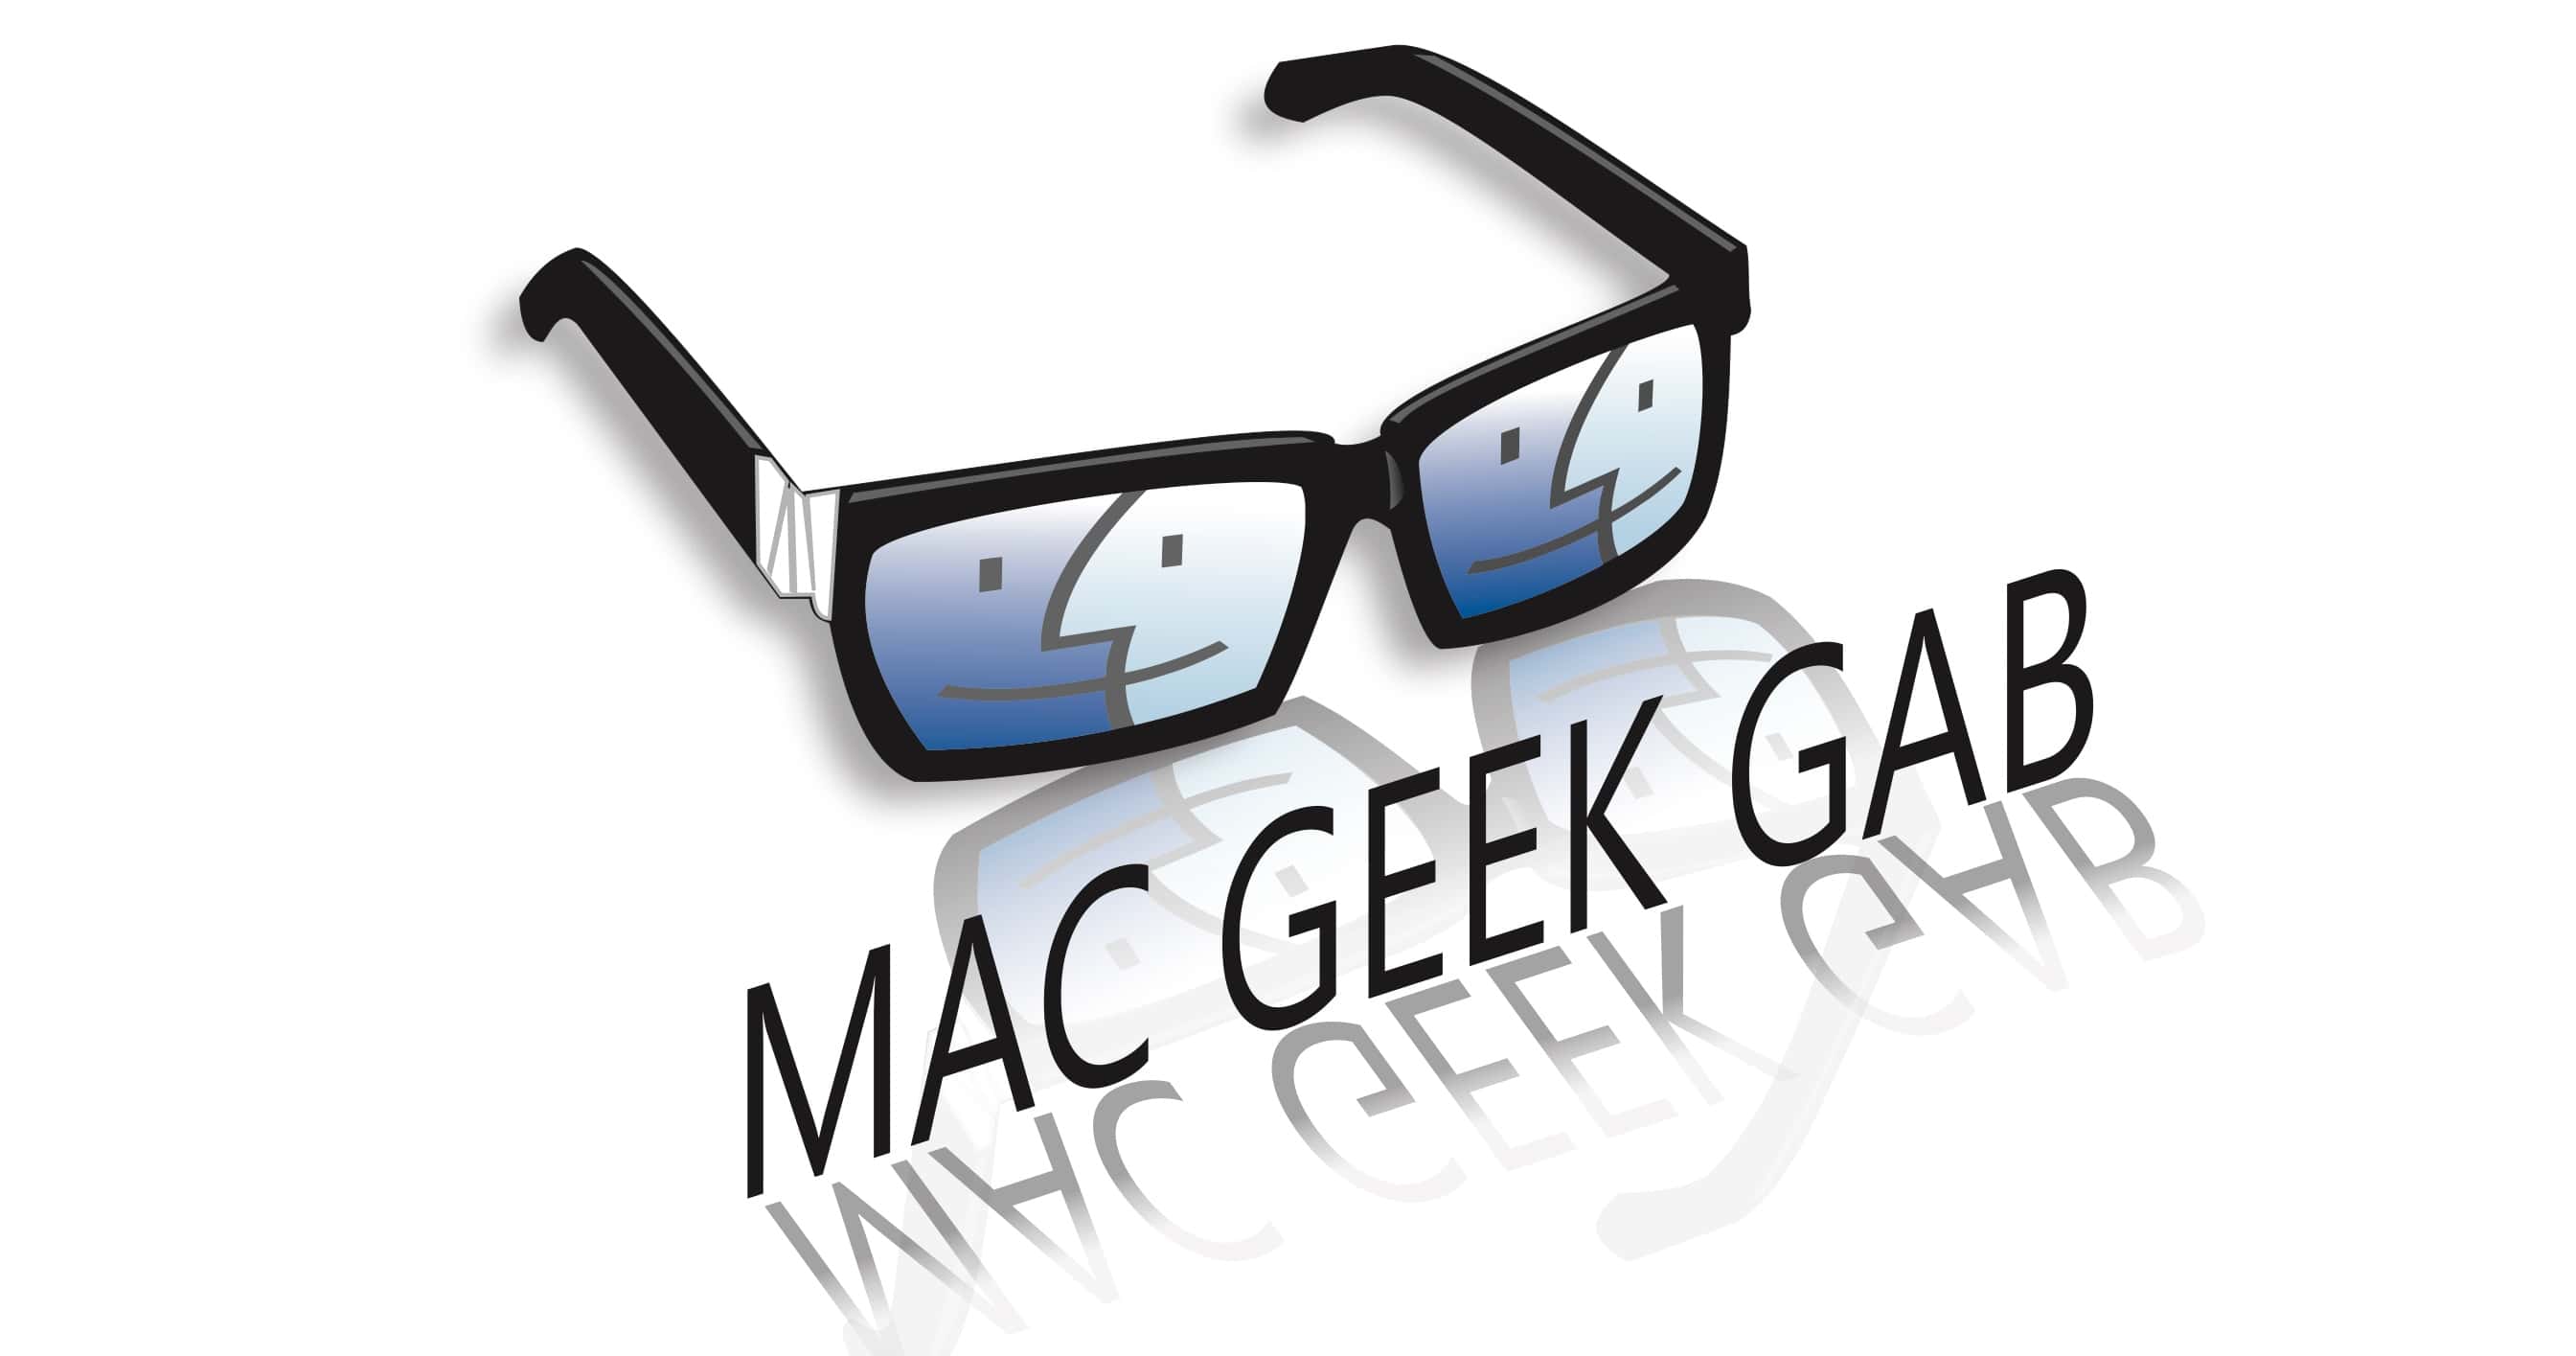 More Mac Tips Than You Can Shake a Stick At – Mac Geek Gab 648